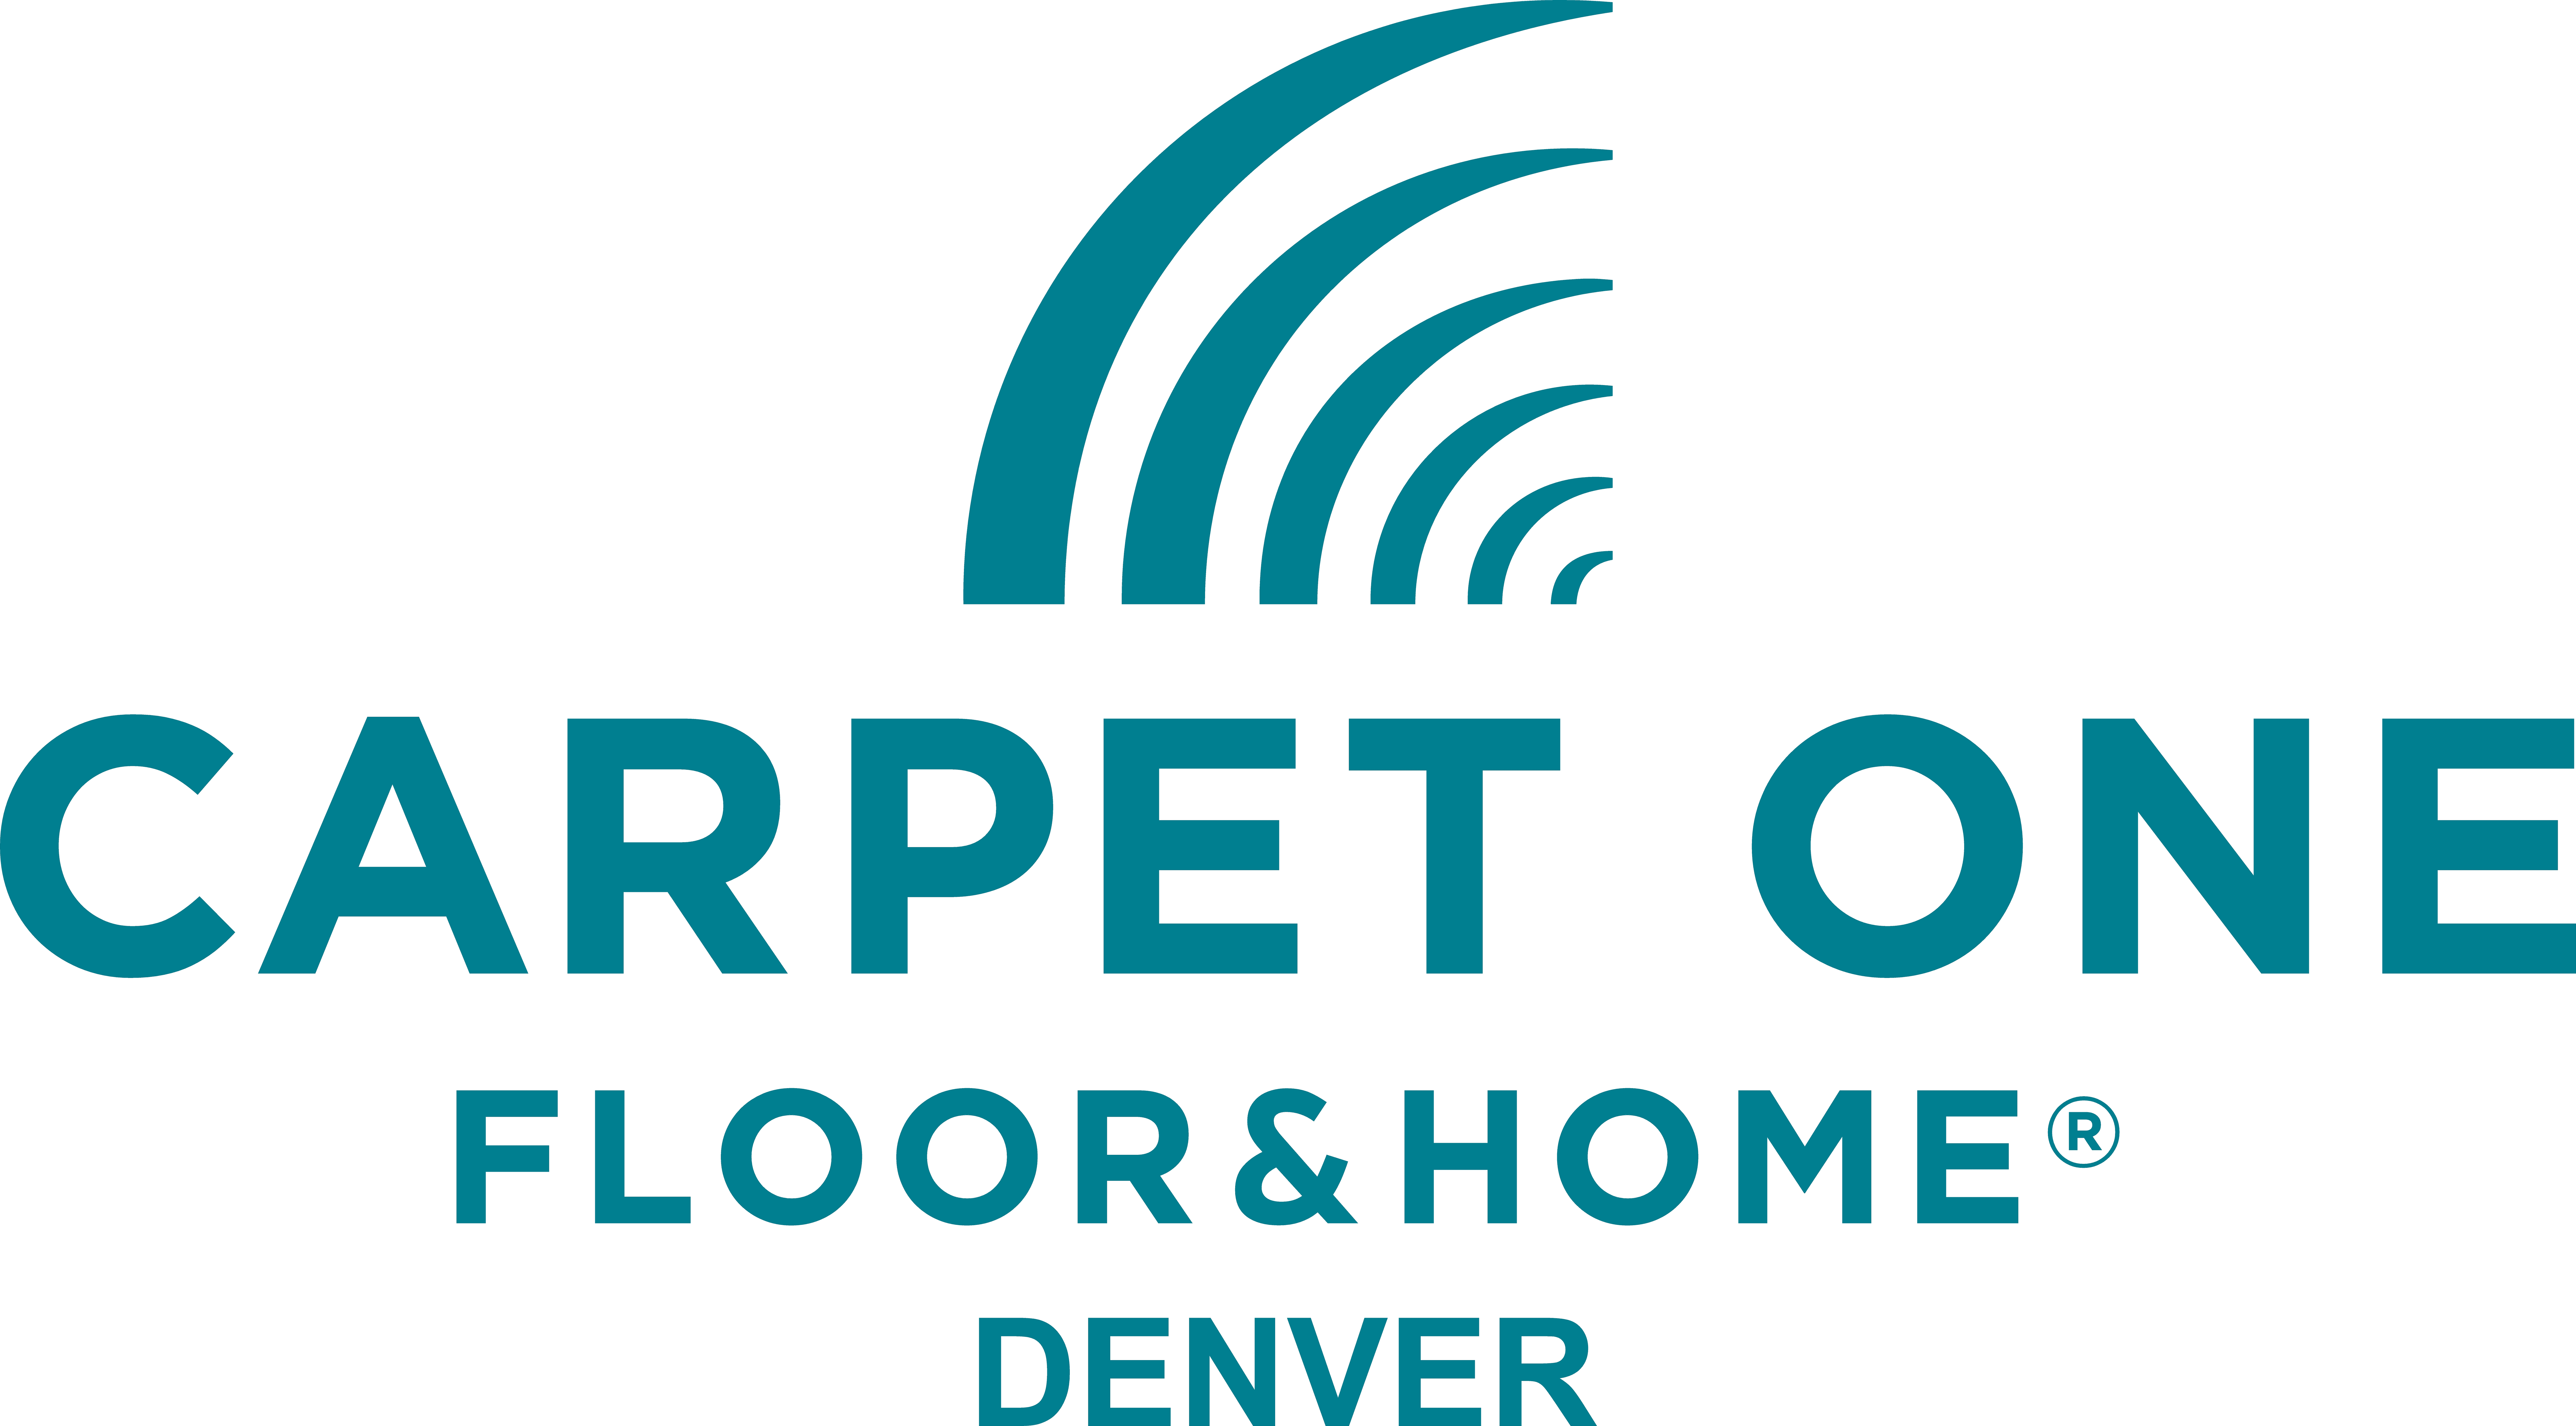 Carpet One Floor & Home Denver Logo